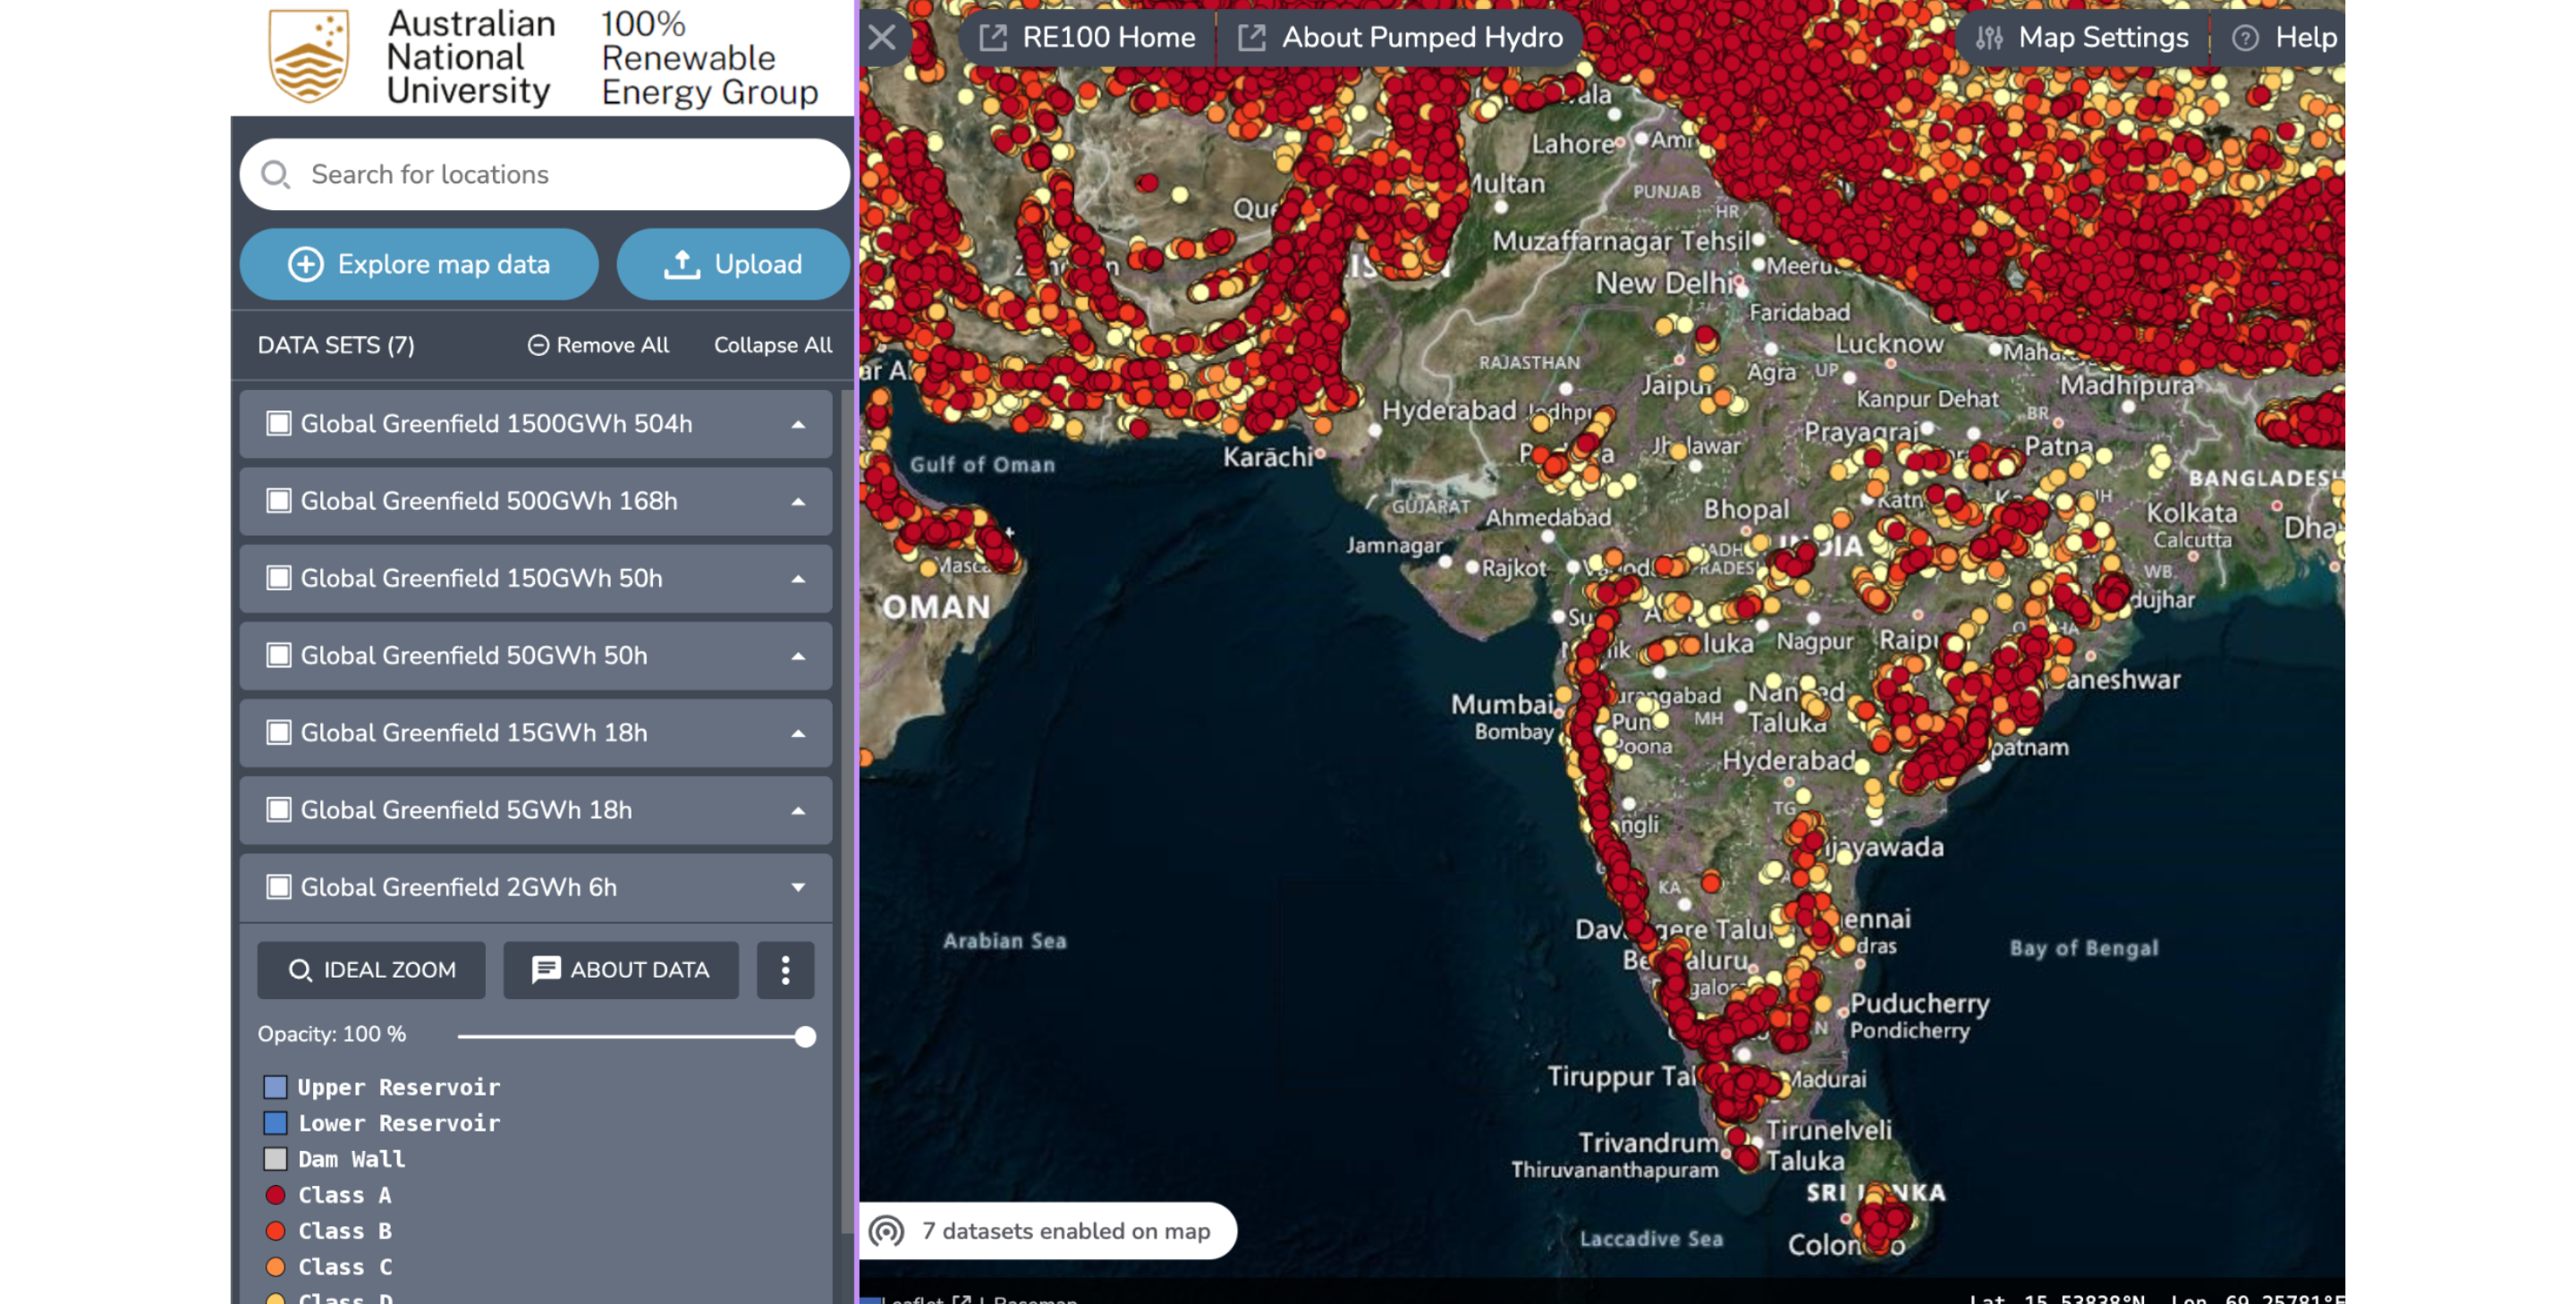 Closed loop, pumped hydro resource capacity in India per Australia National University's global GIS greenfield atlas